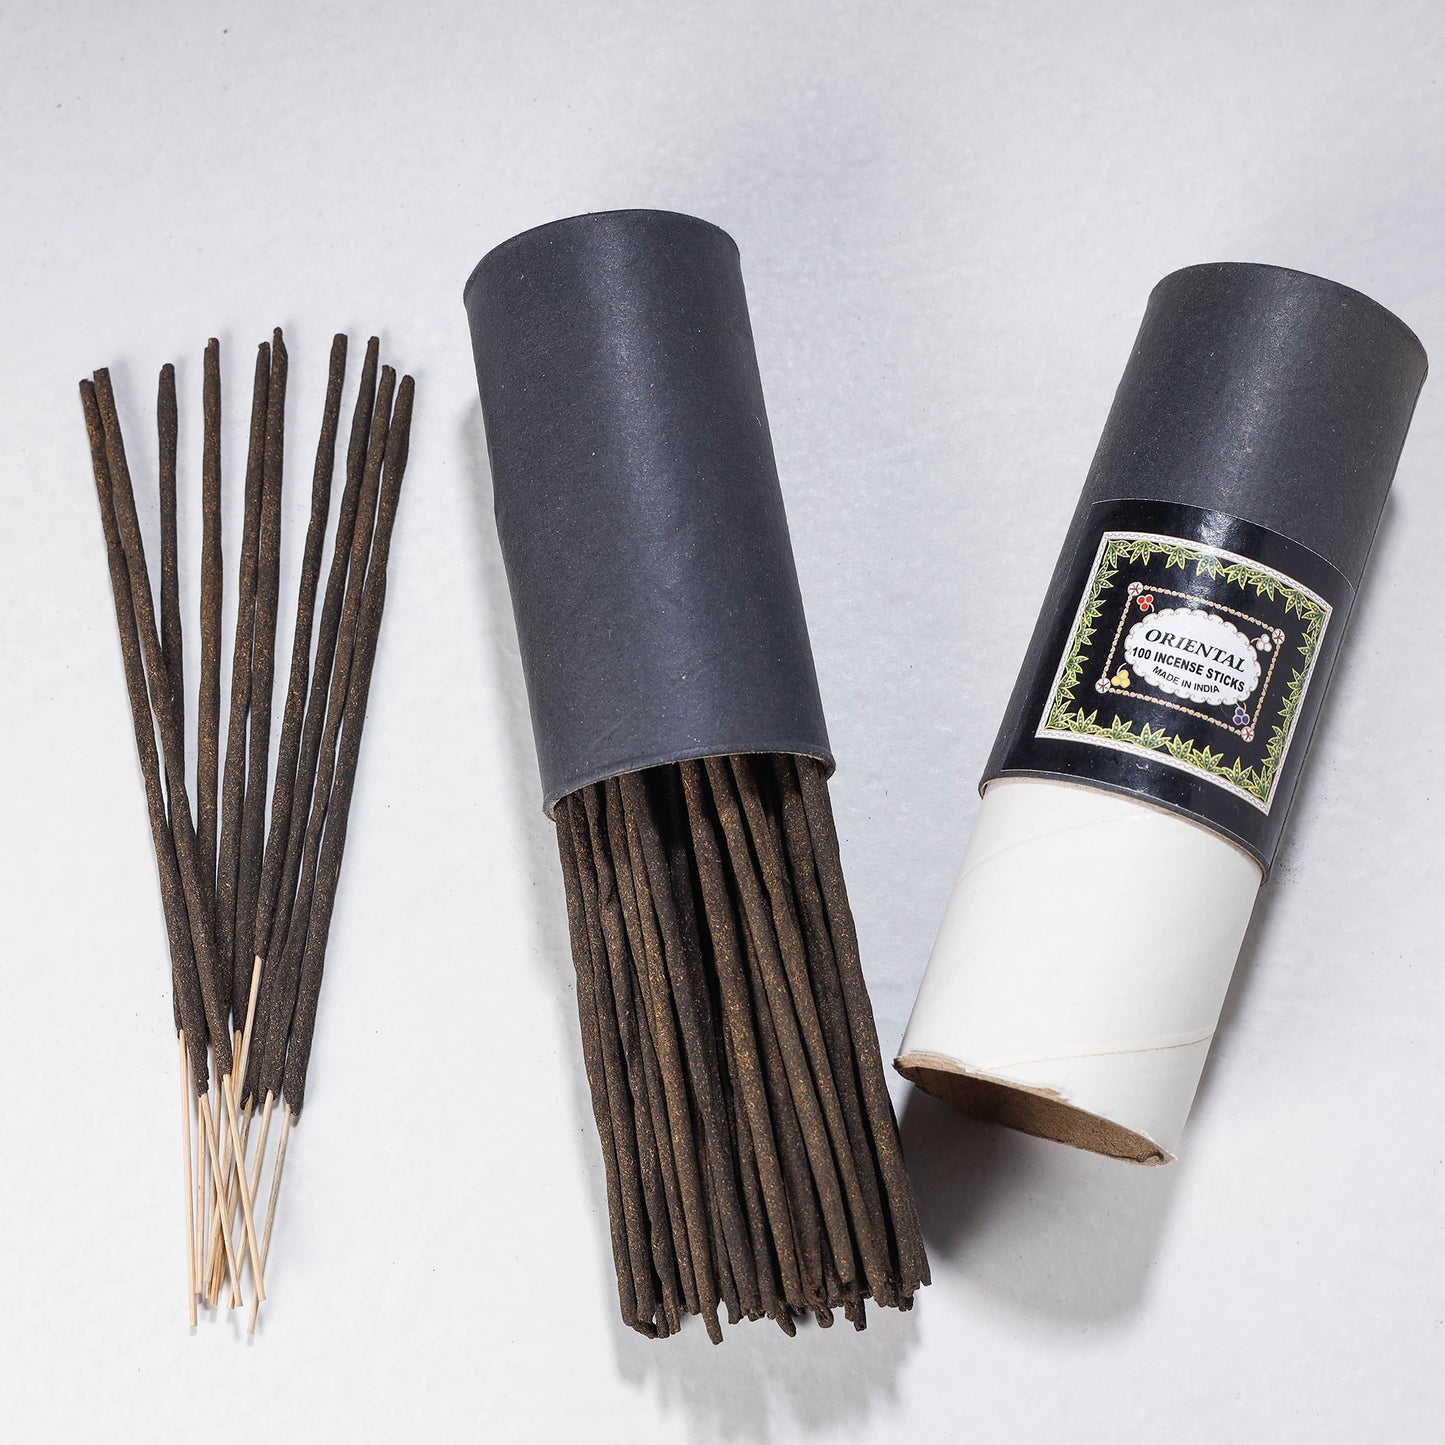 Oriental - Natural Flora Incense 100 sticks